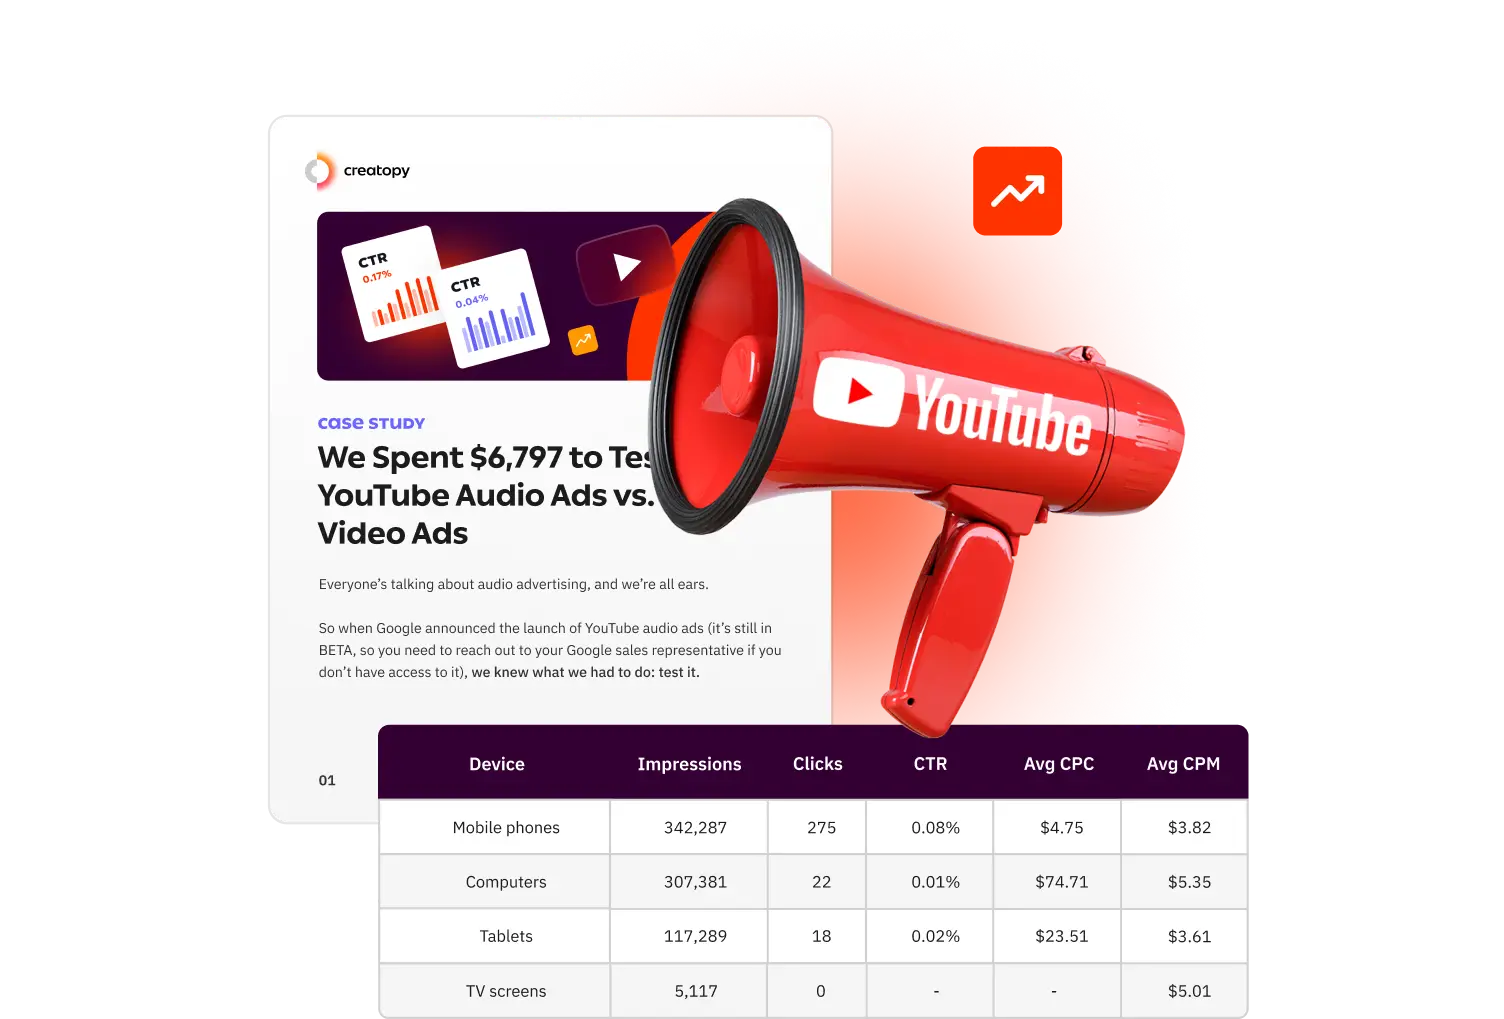 YouTube Audio Ads vs. Video Ads case study